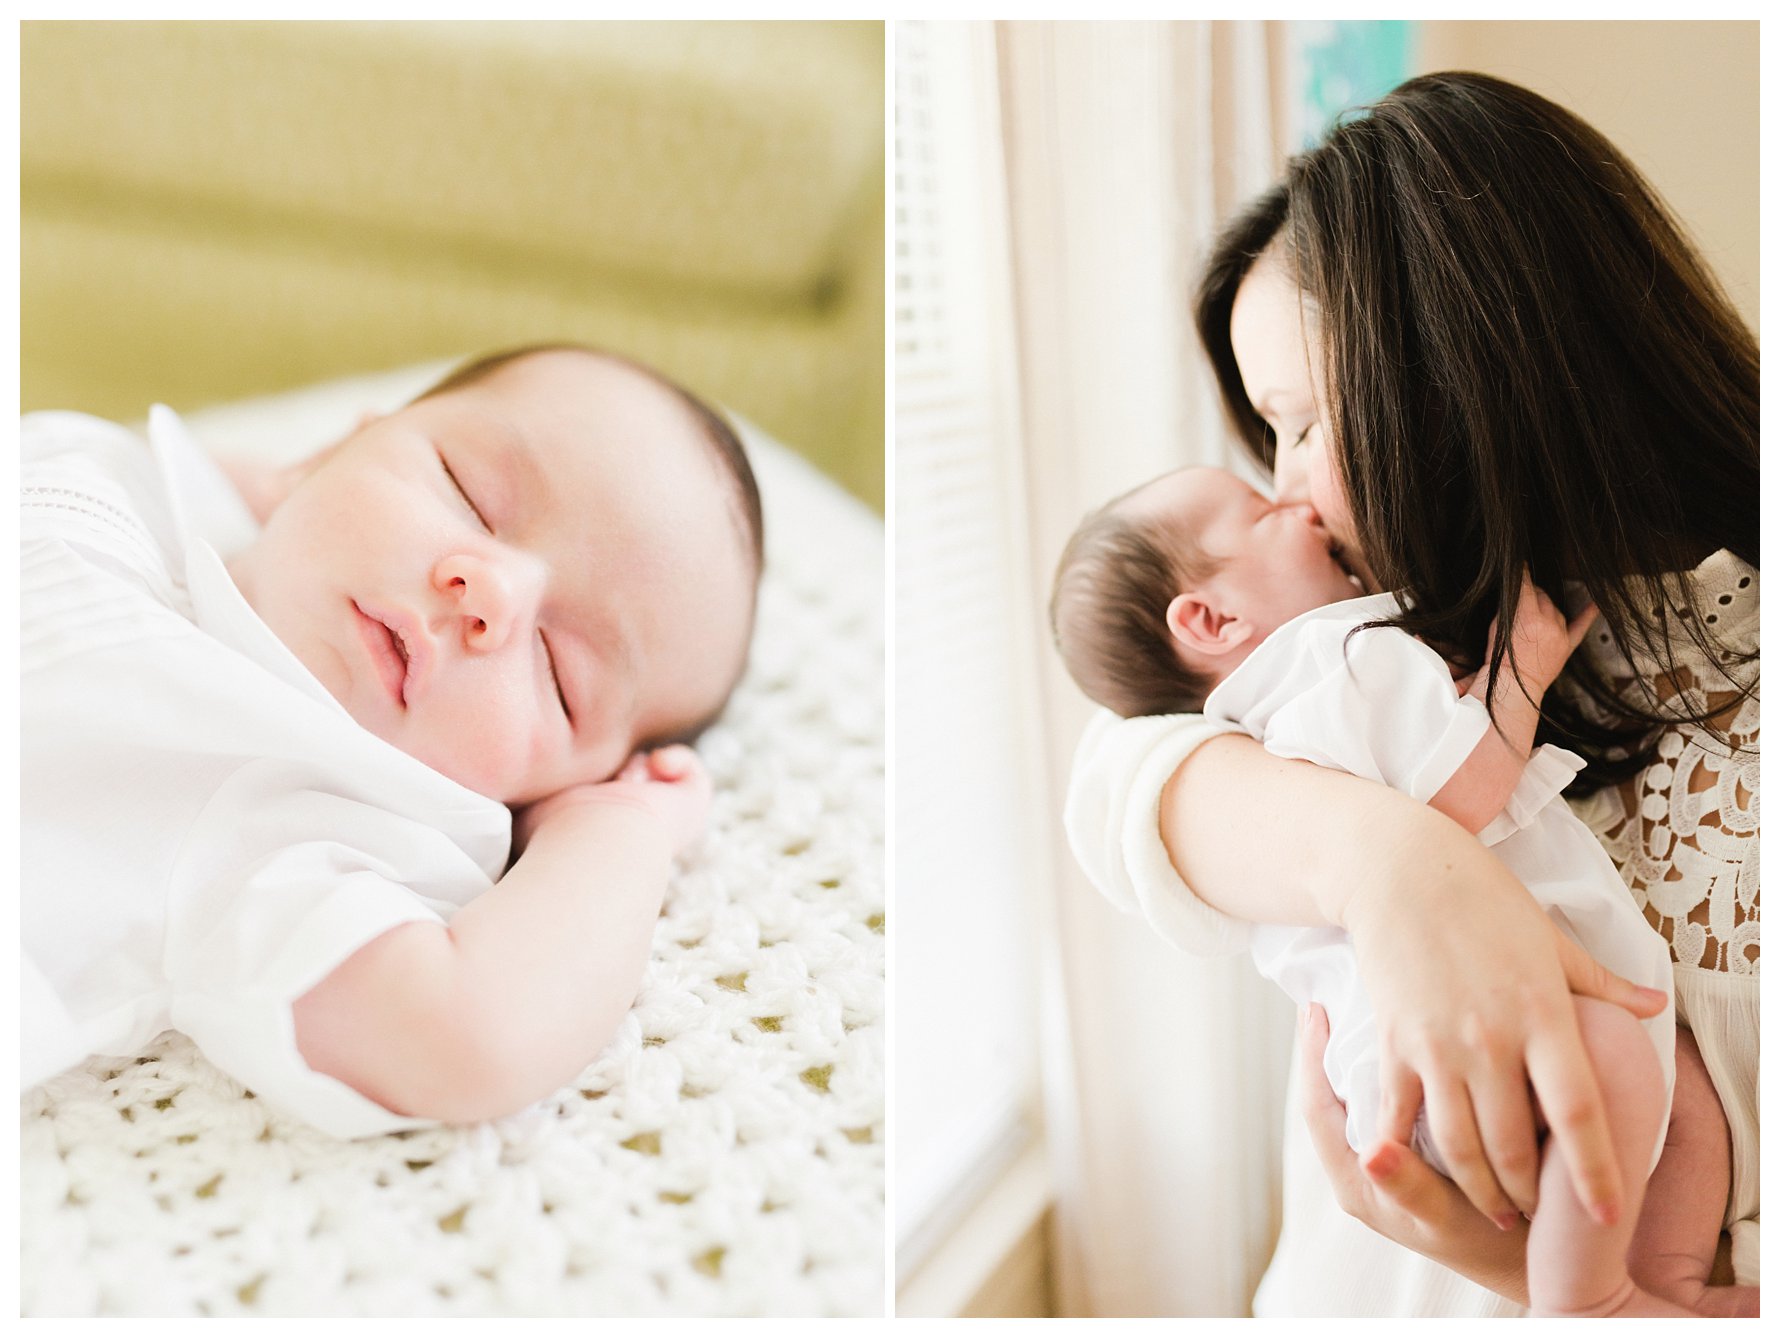 Newborn Photos by Amanda and Grady